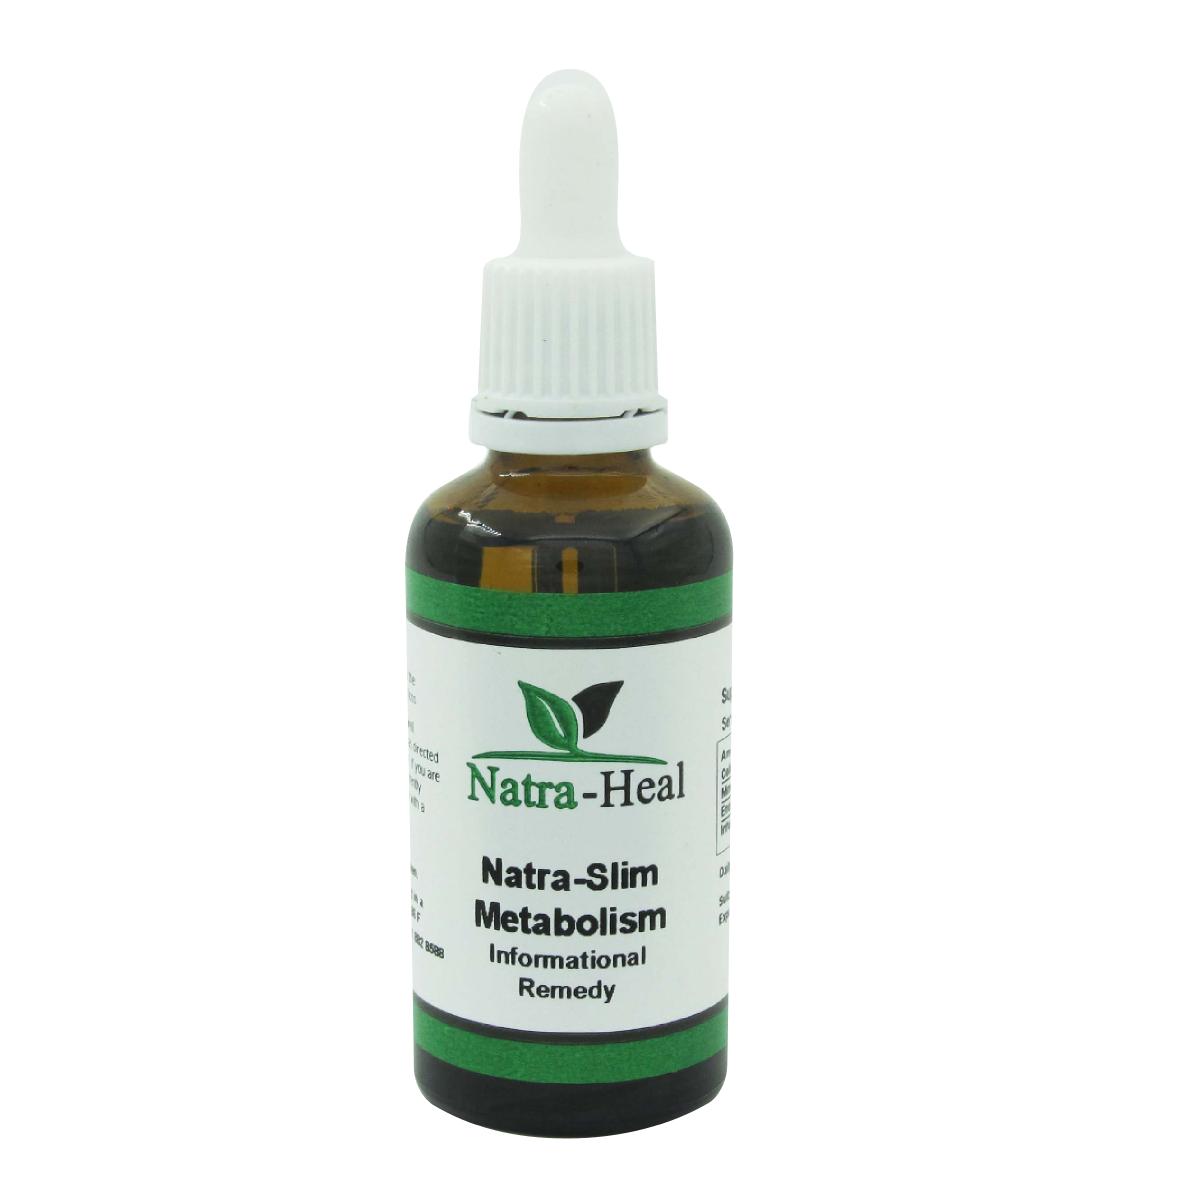 Natra-Slim Metabolism (I)